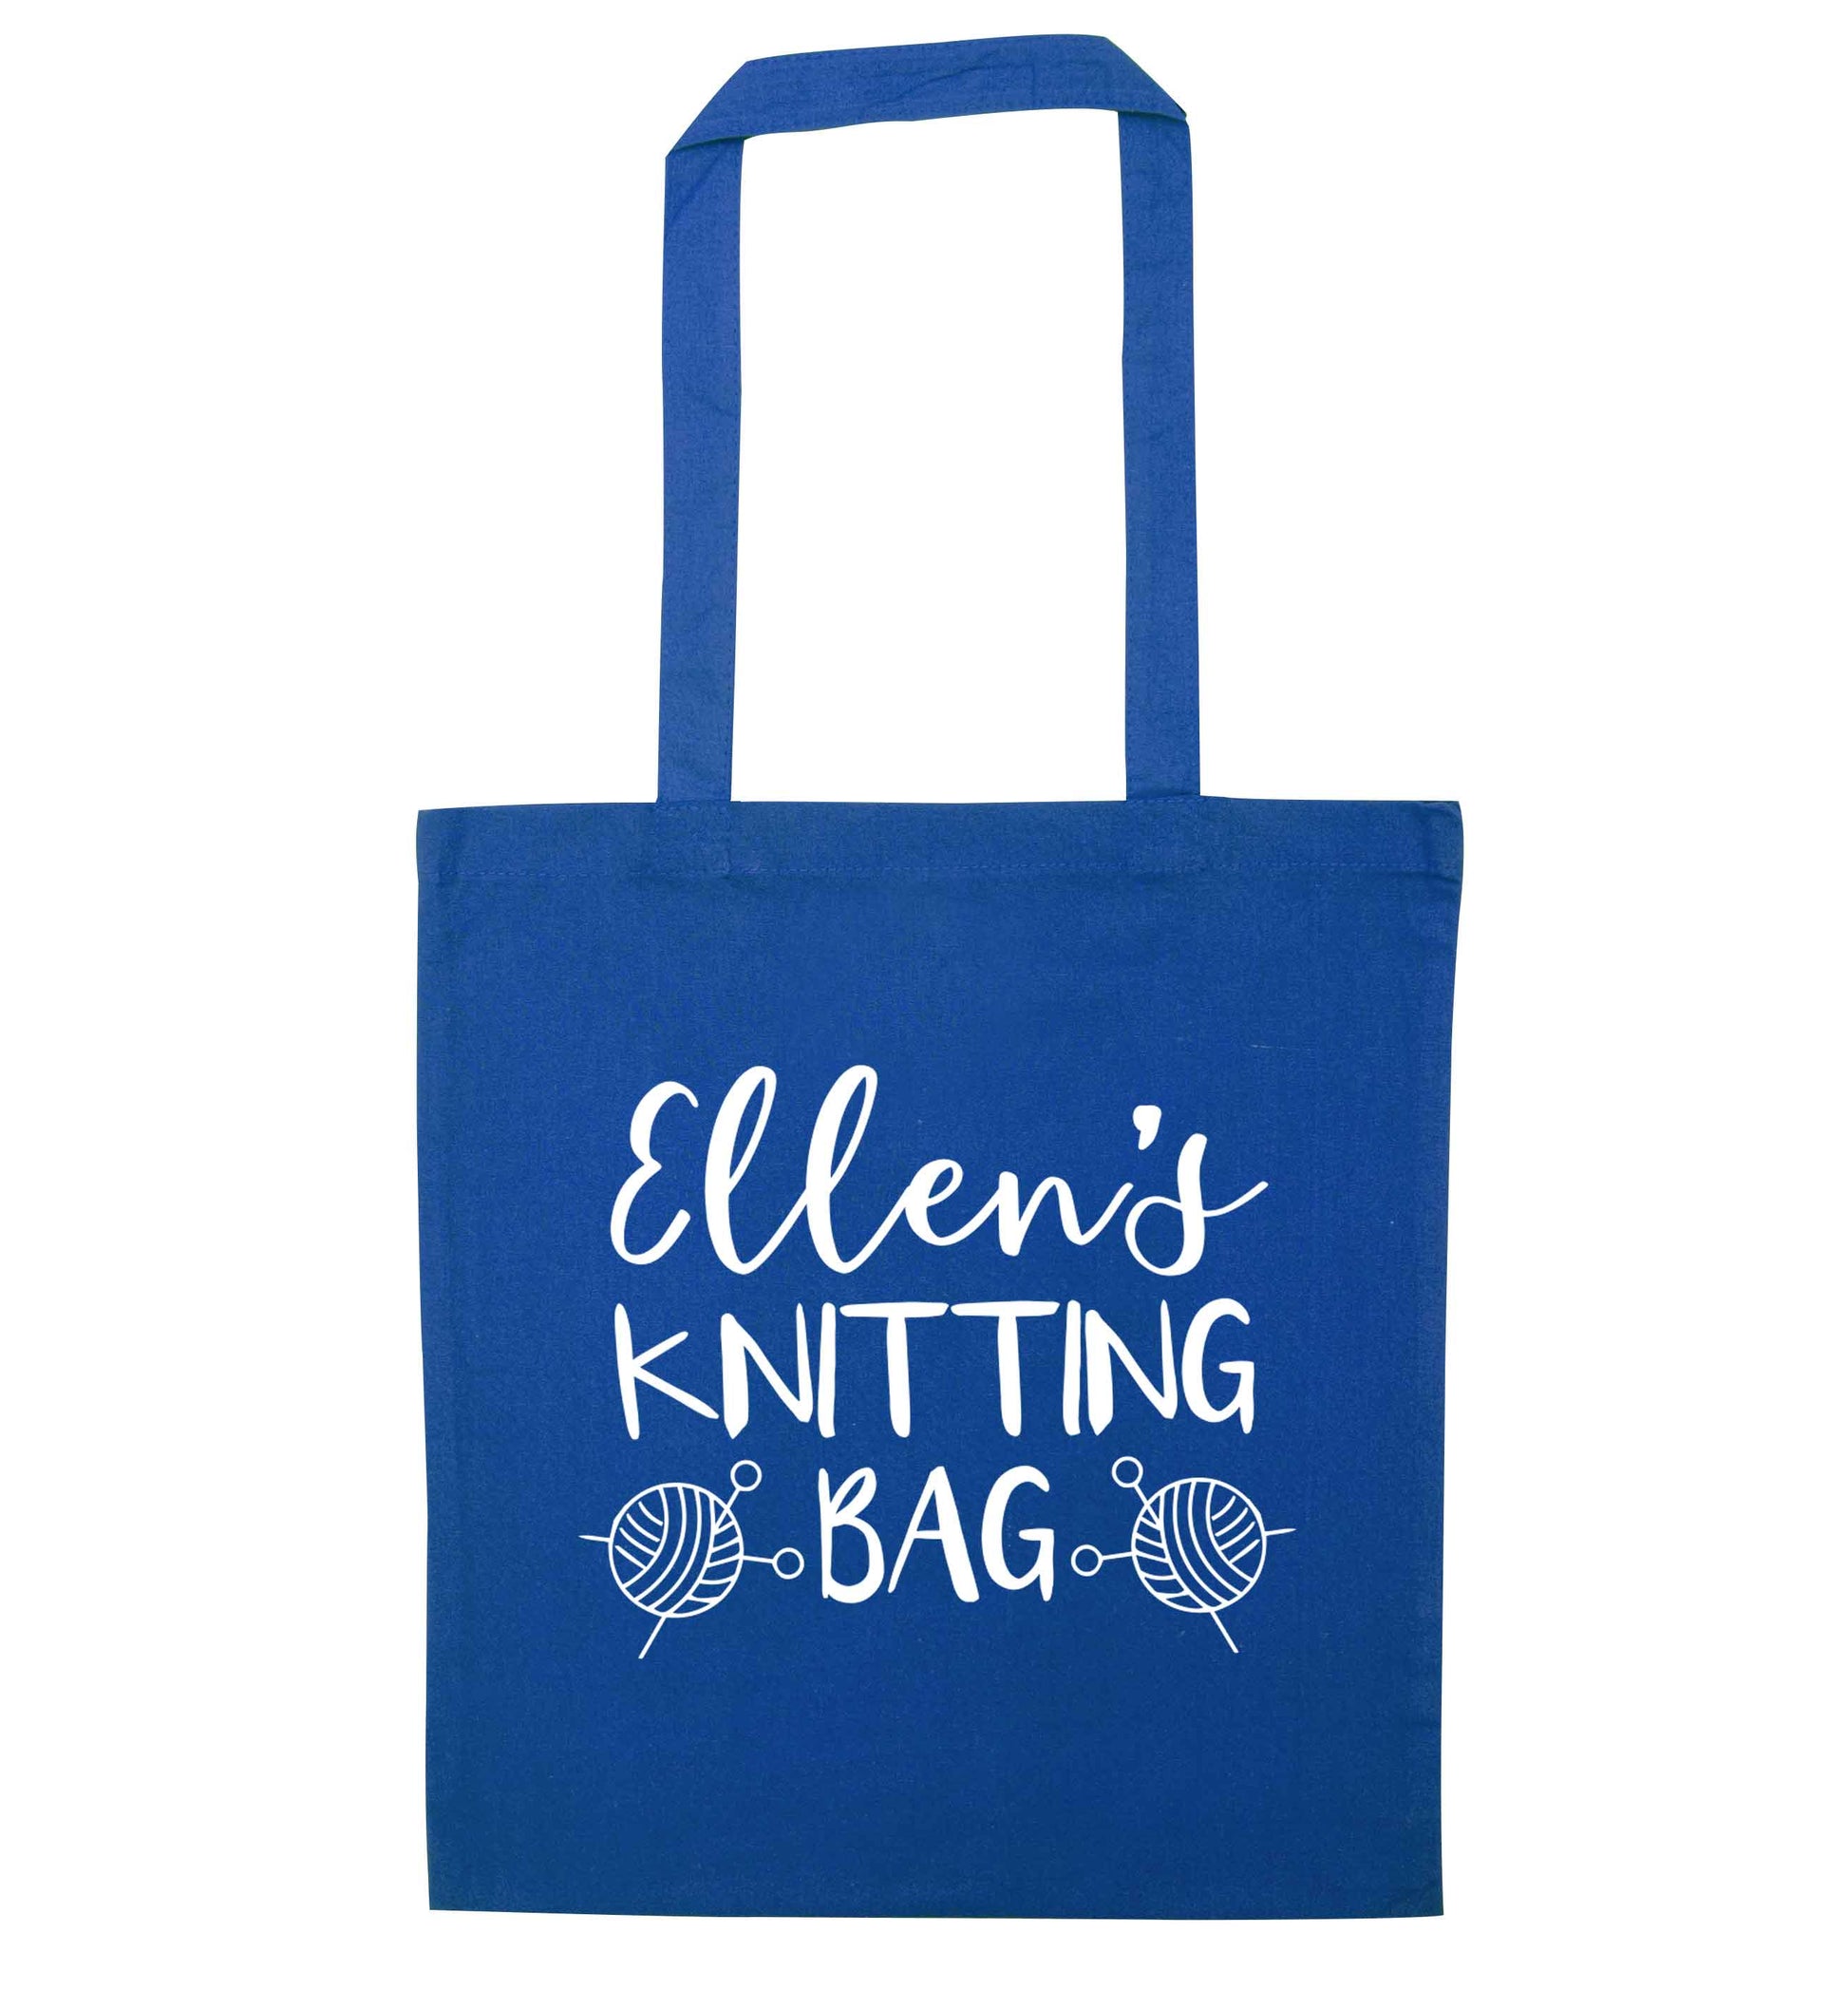 Personalised knitting bag blue tote bag